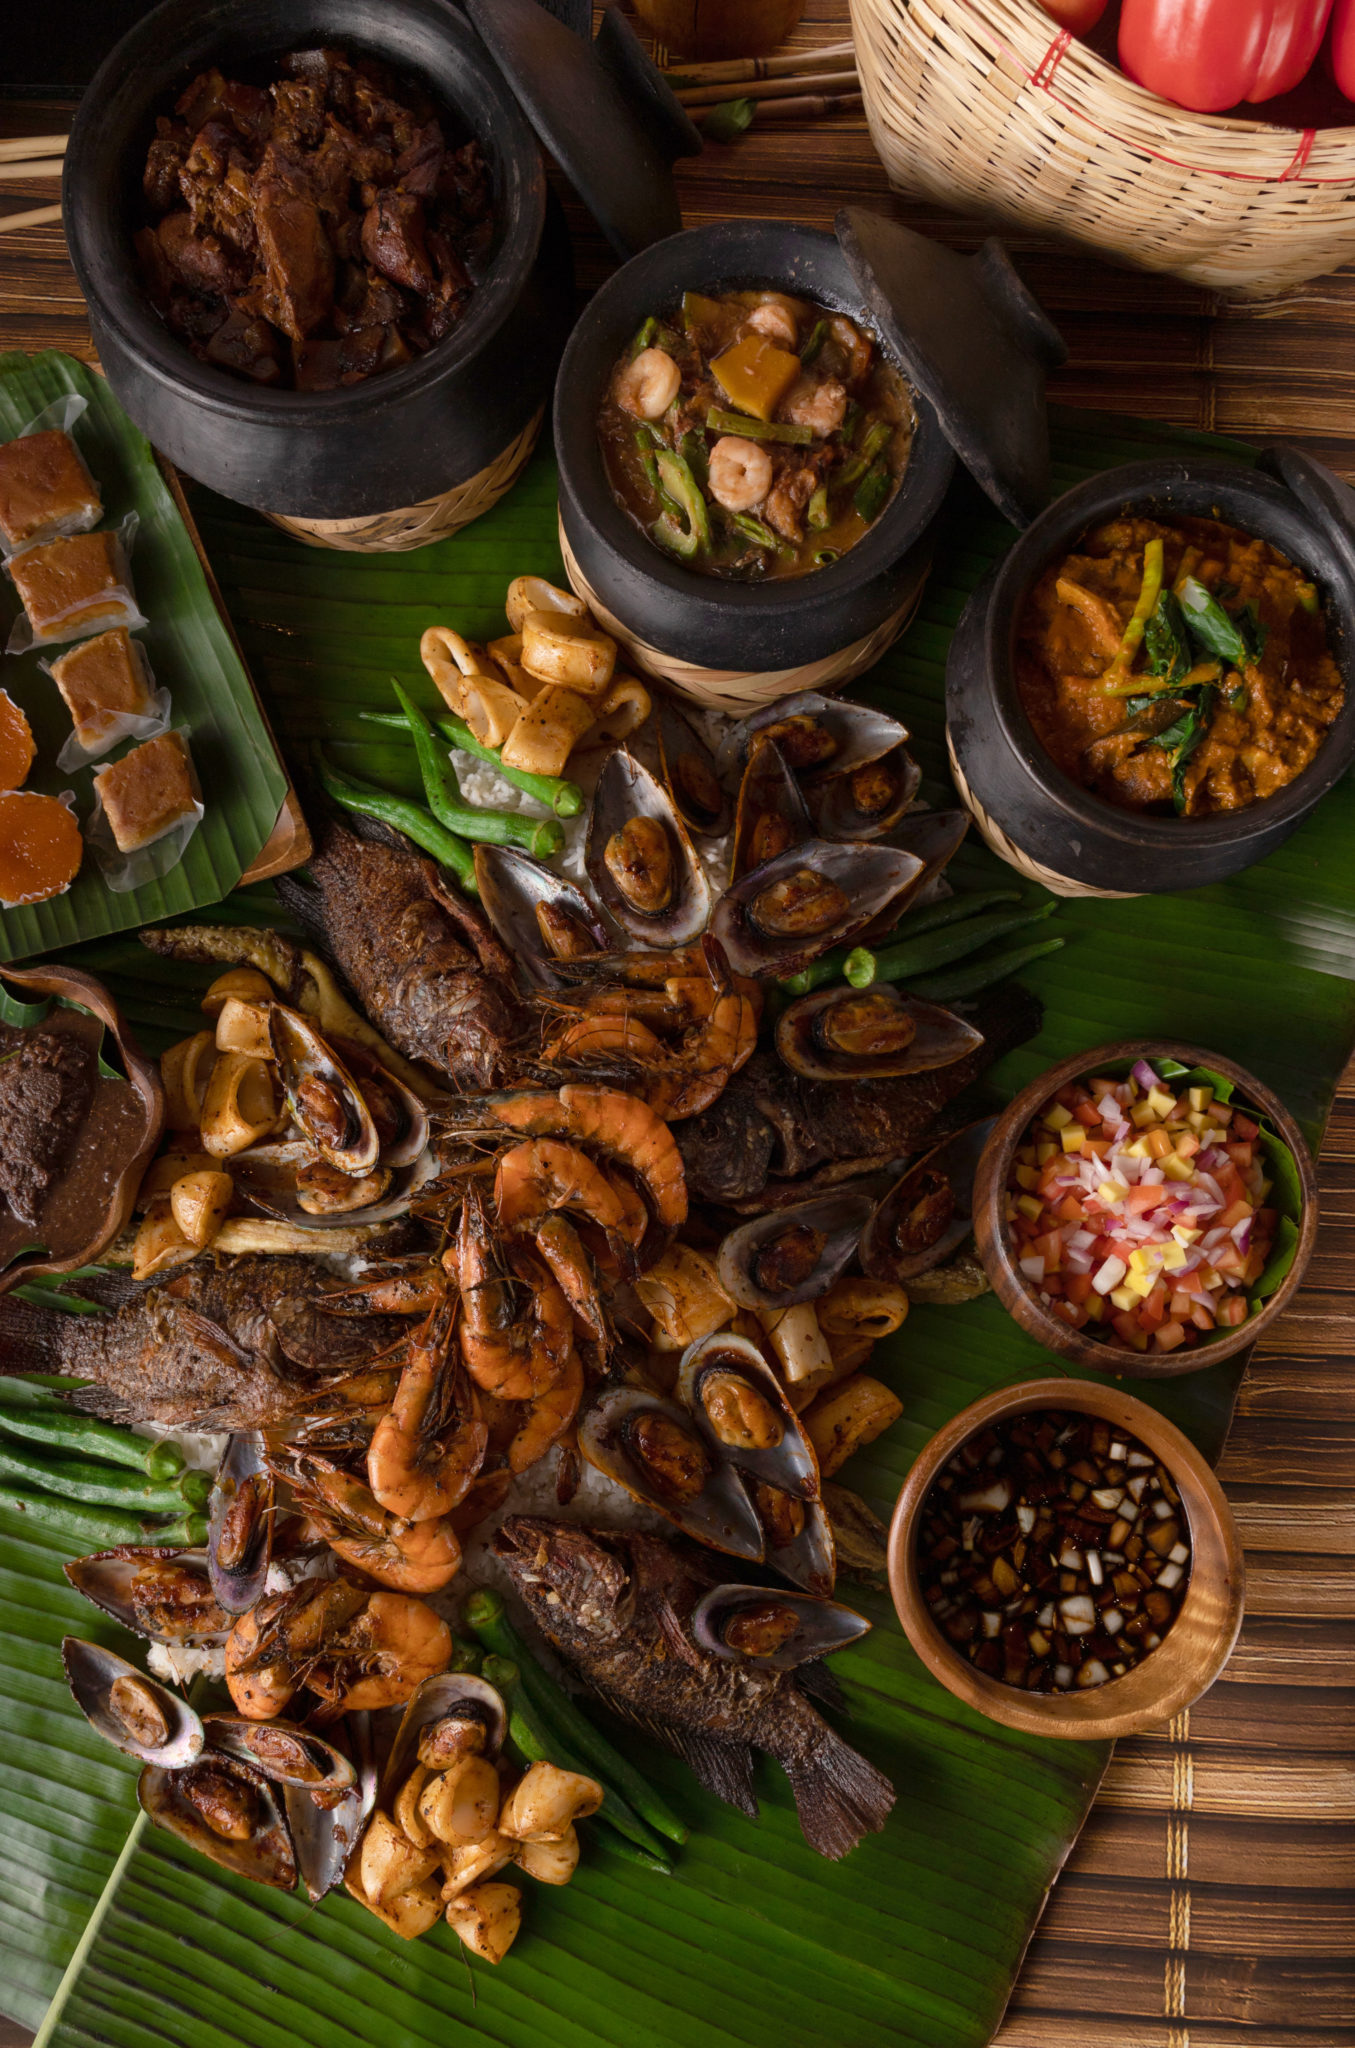 Silogue offers an all-day Filipino buffet